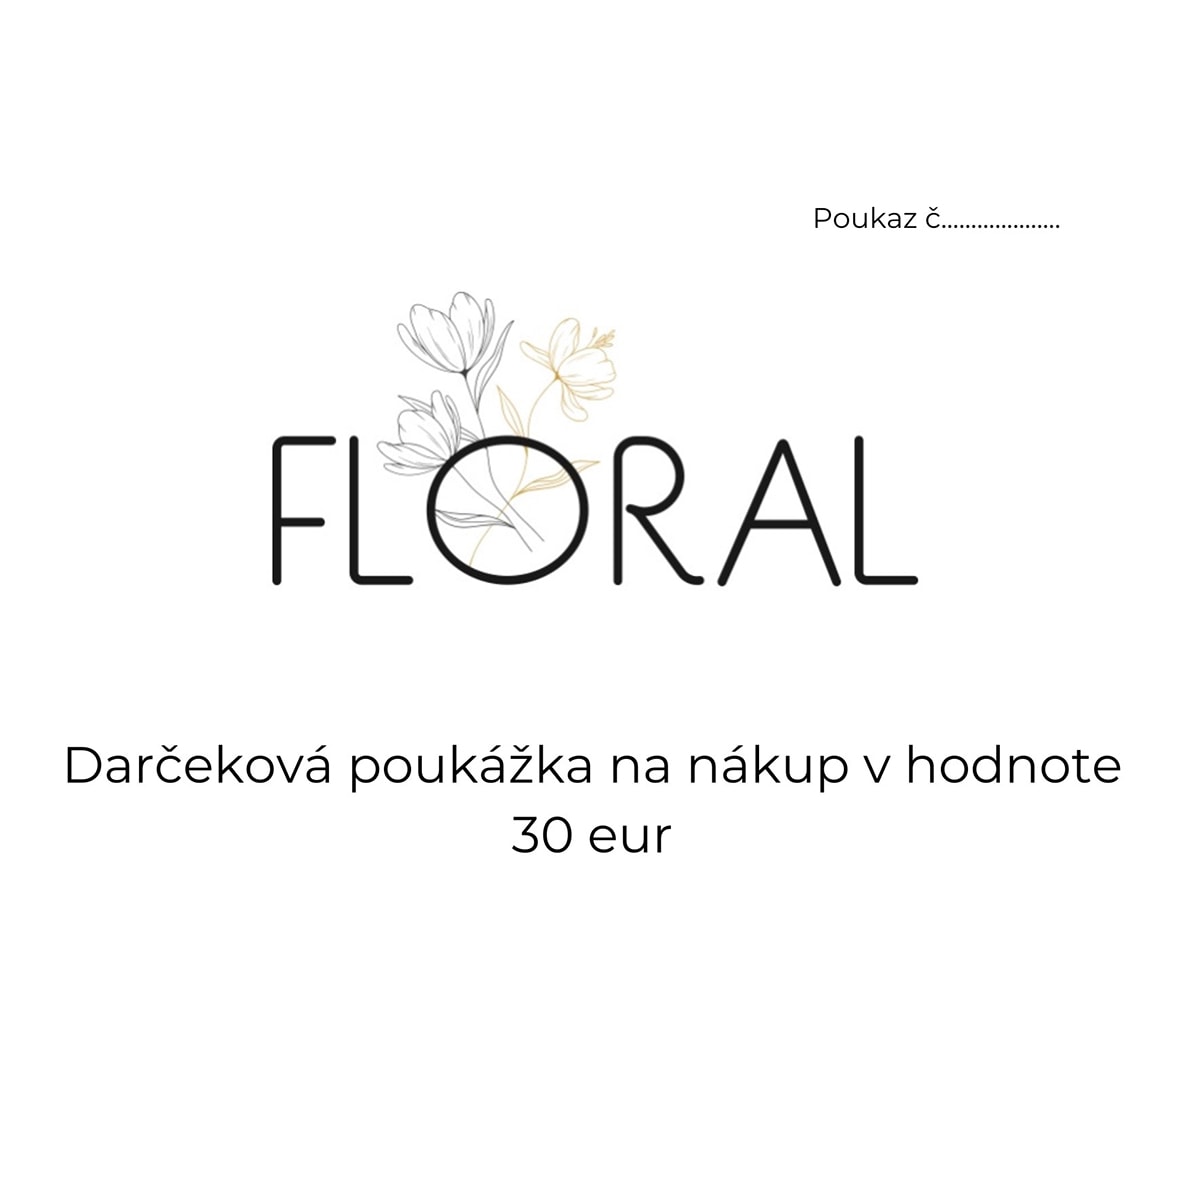 Darcekova-poukazka-na-nakup-kvetov-kytic-obrazov-dekoracii-v-hodnote-30eur